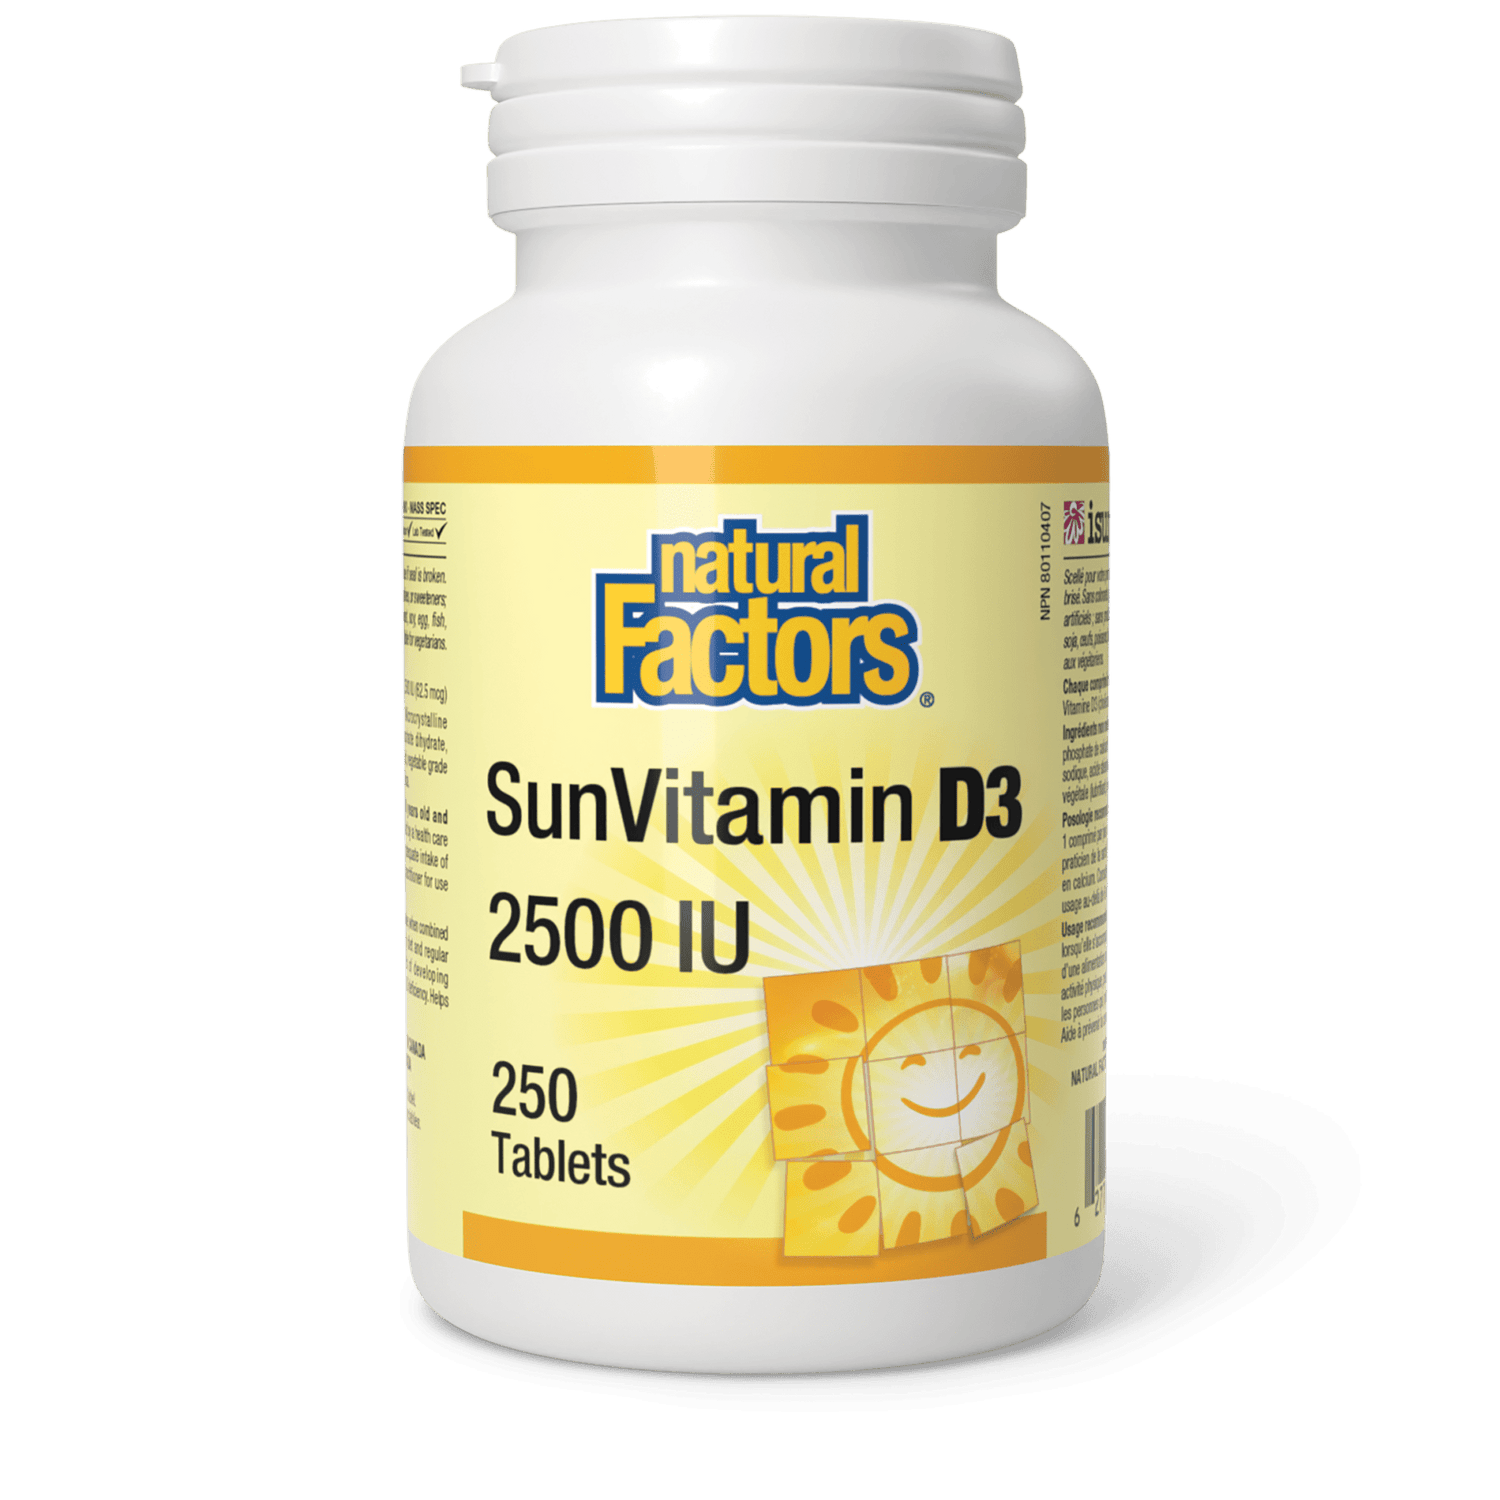 SunVitamin D3 Tablets 2500 IU, Natural Factors|v|image|1076